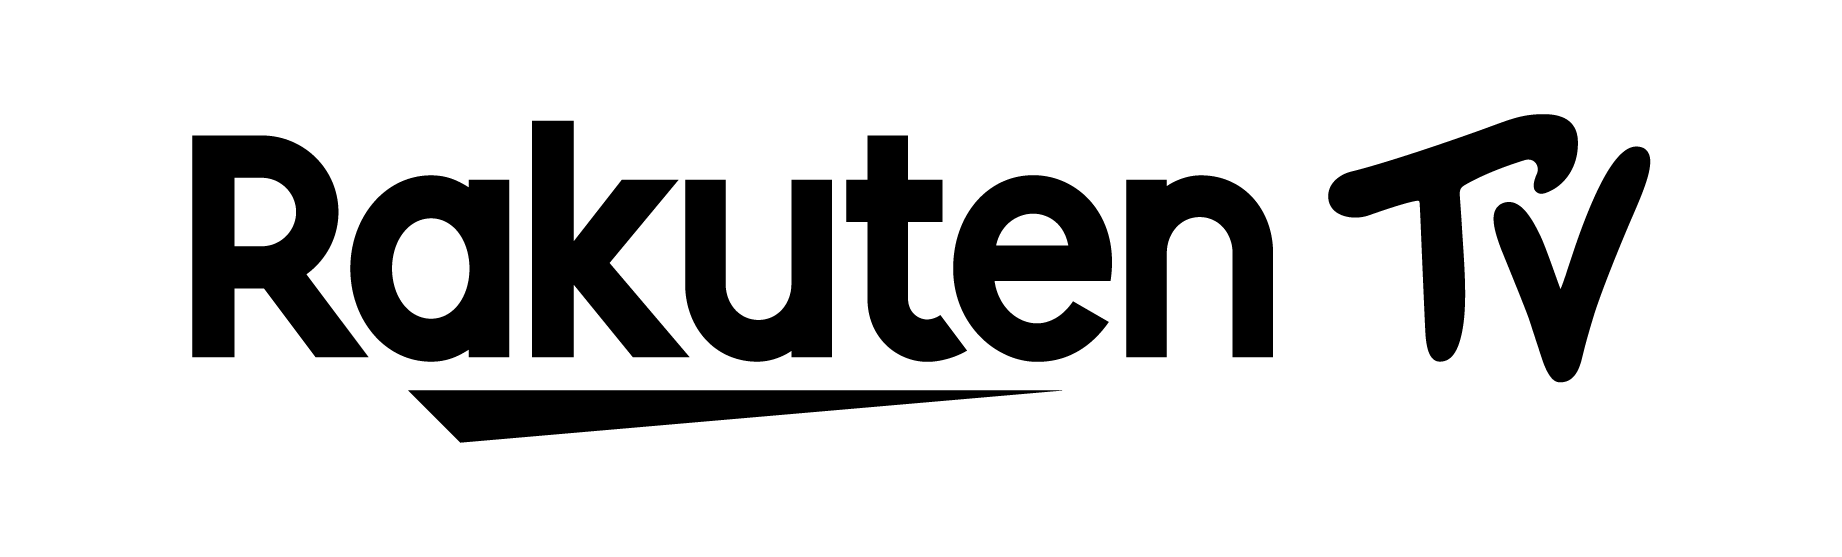 rakuten-logo